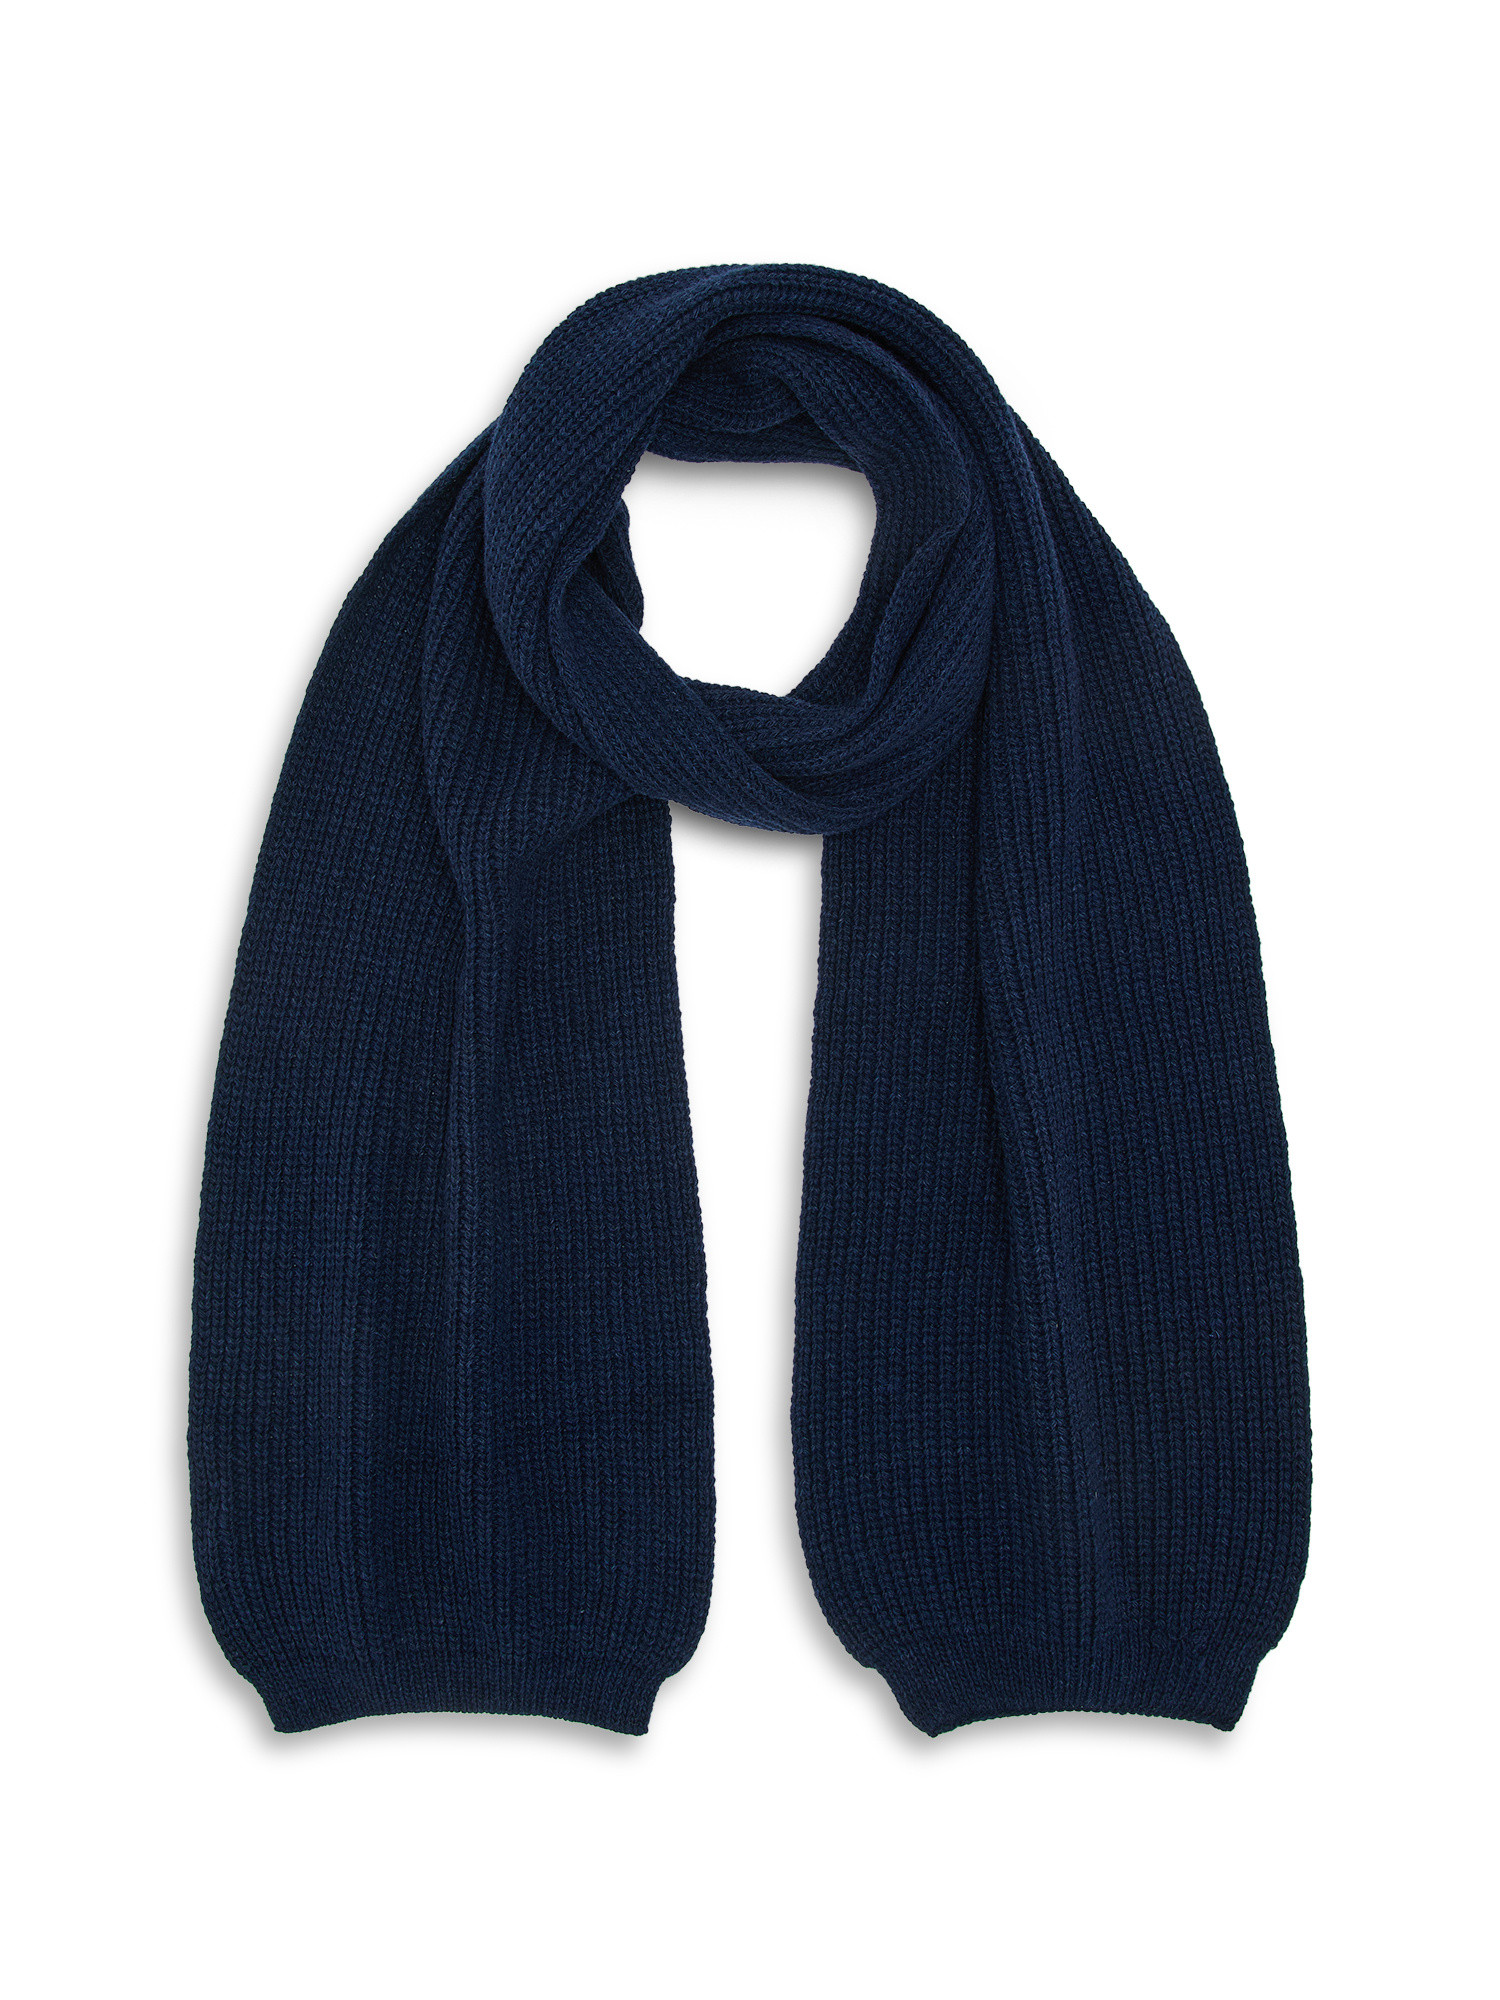 Luca D'Altieri - English rib stitch scarf, Blue, large image number 0